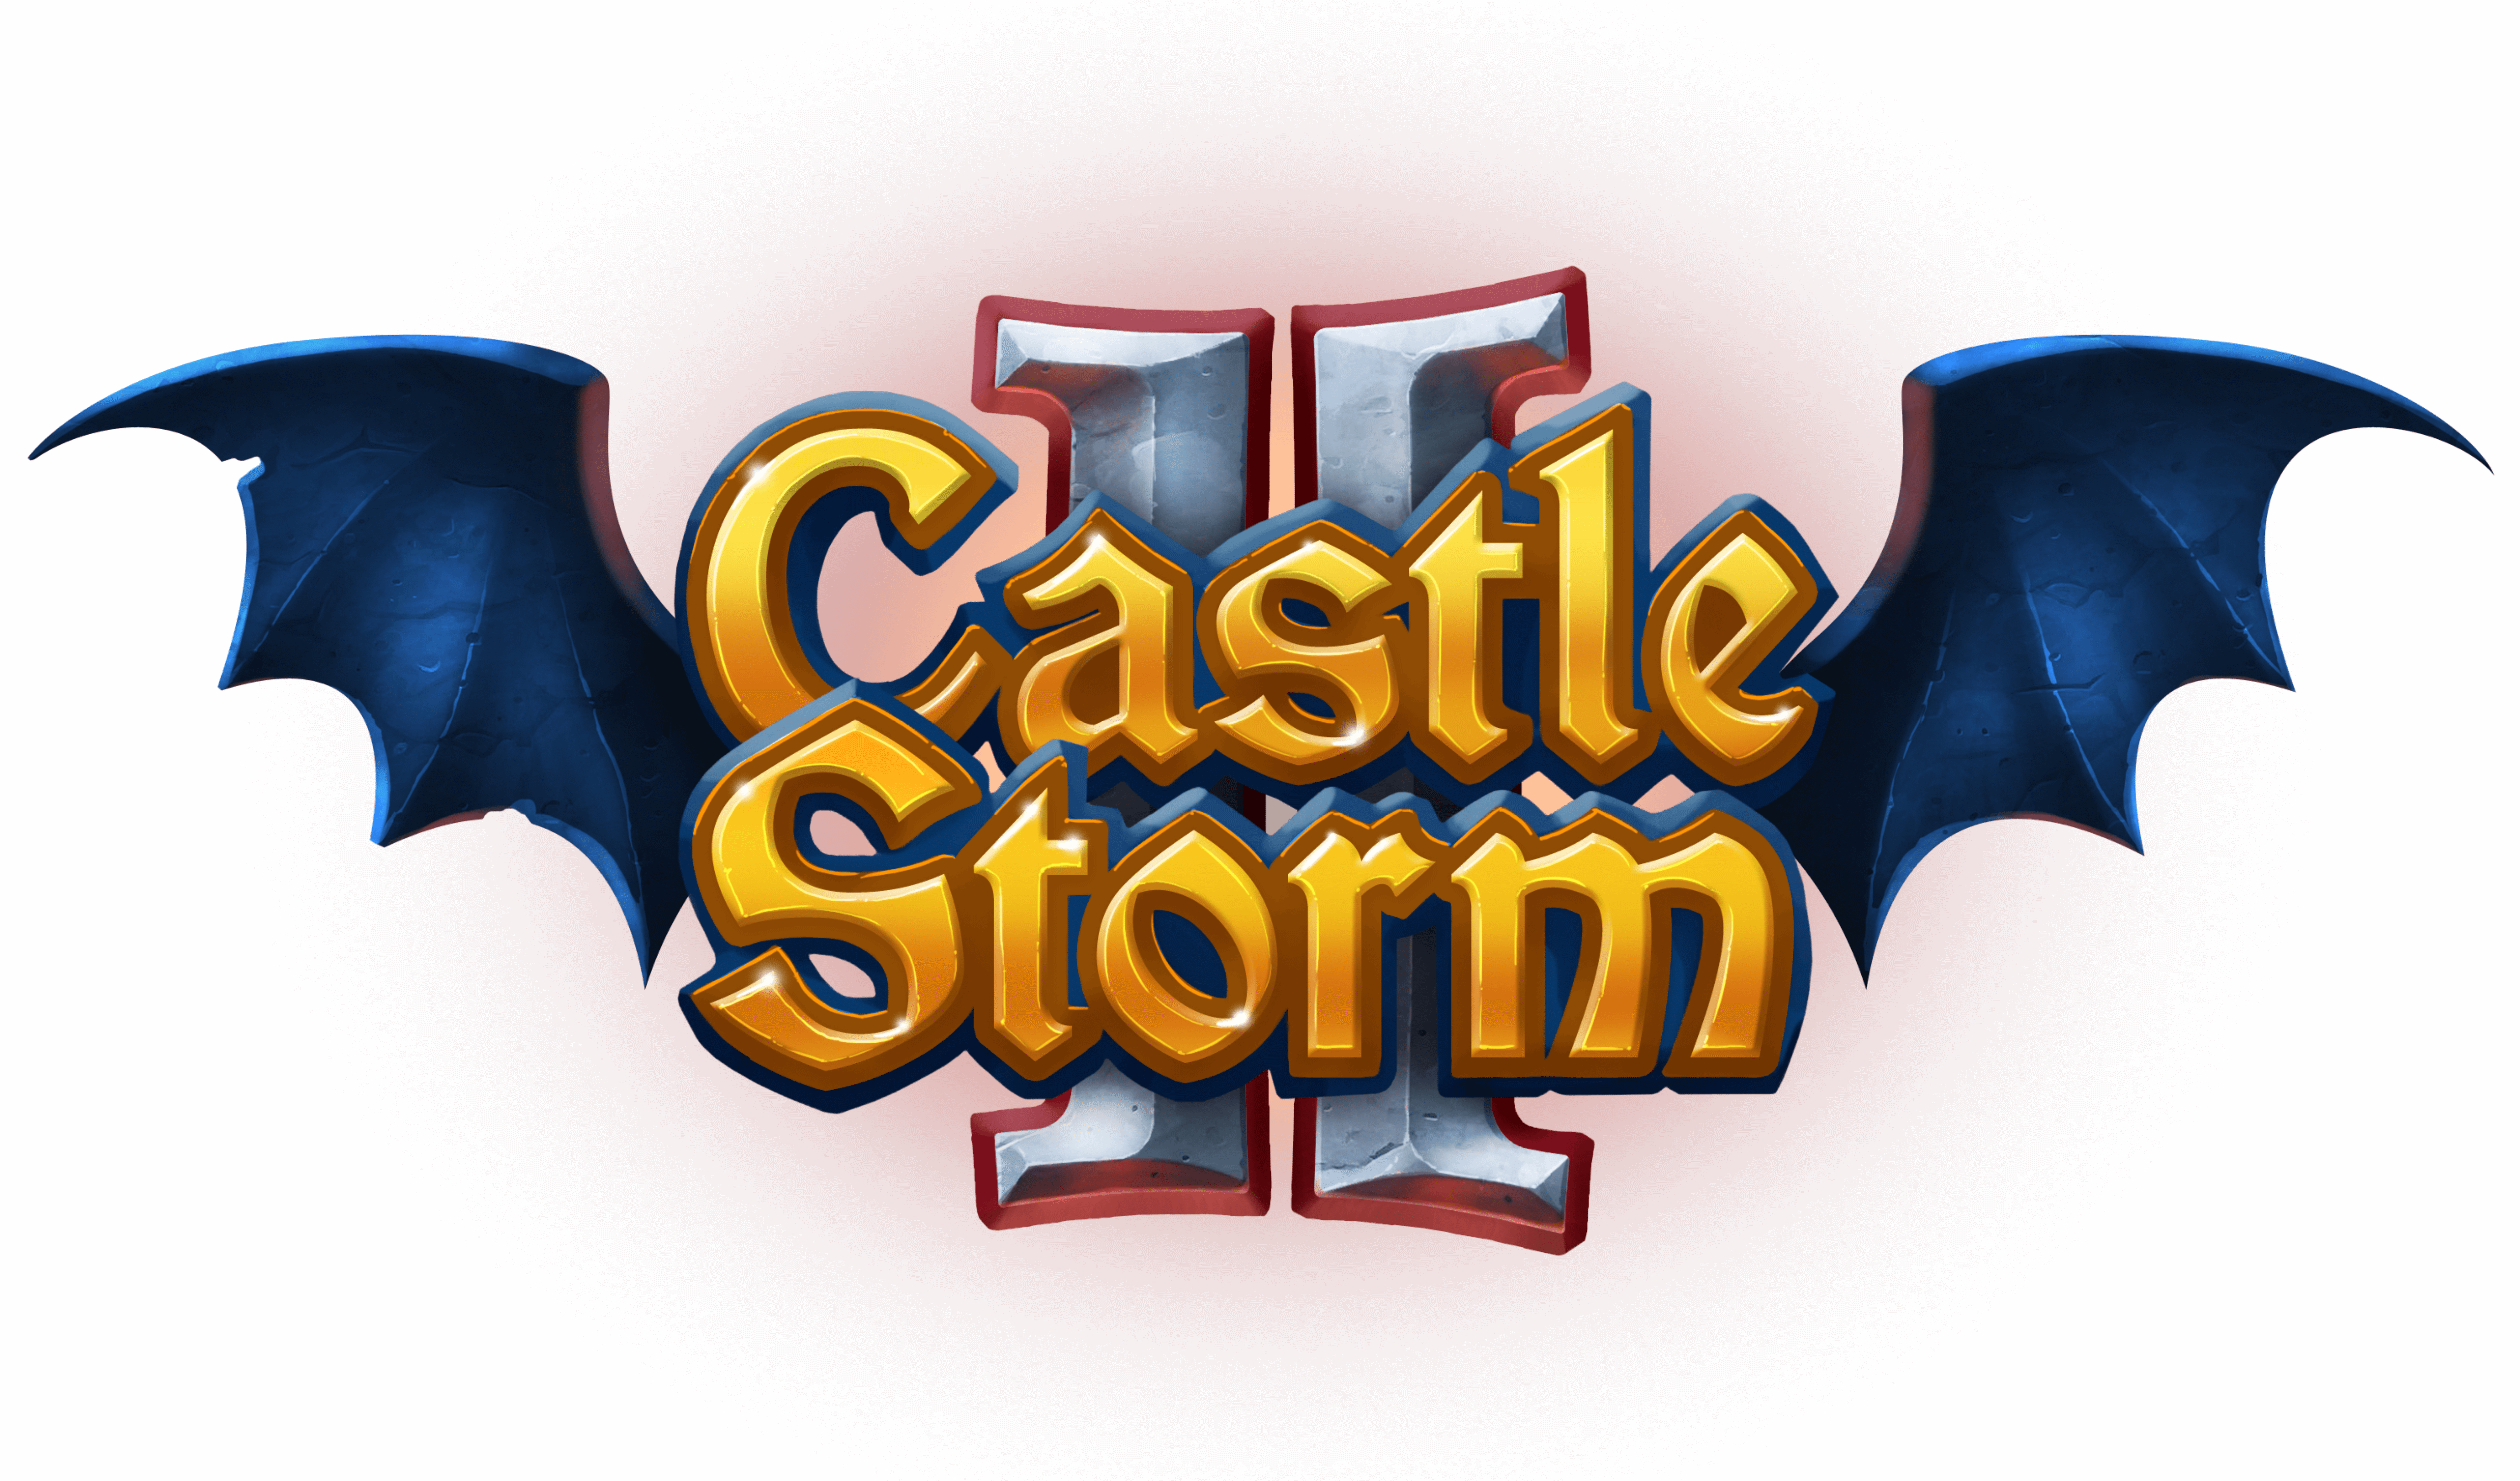 Castlestorm II (2020) на русском языке